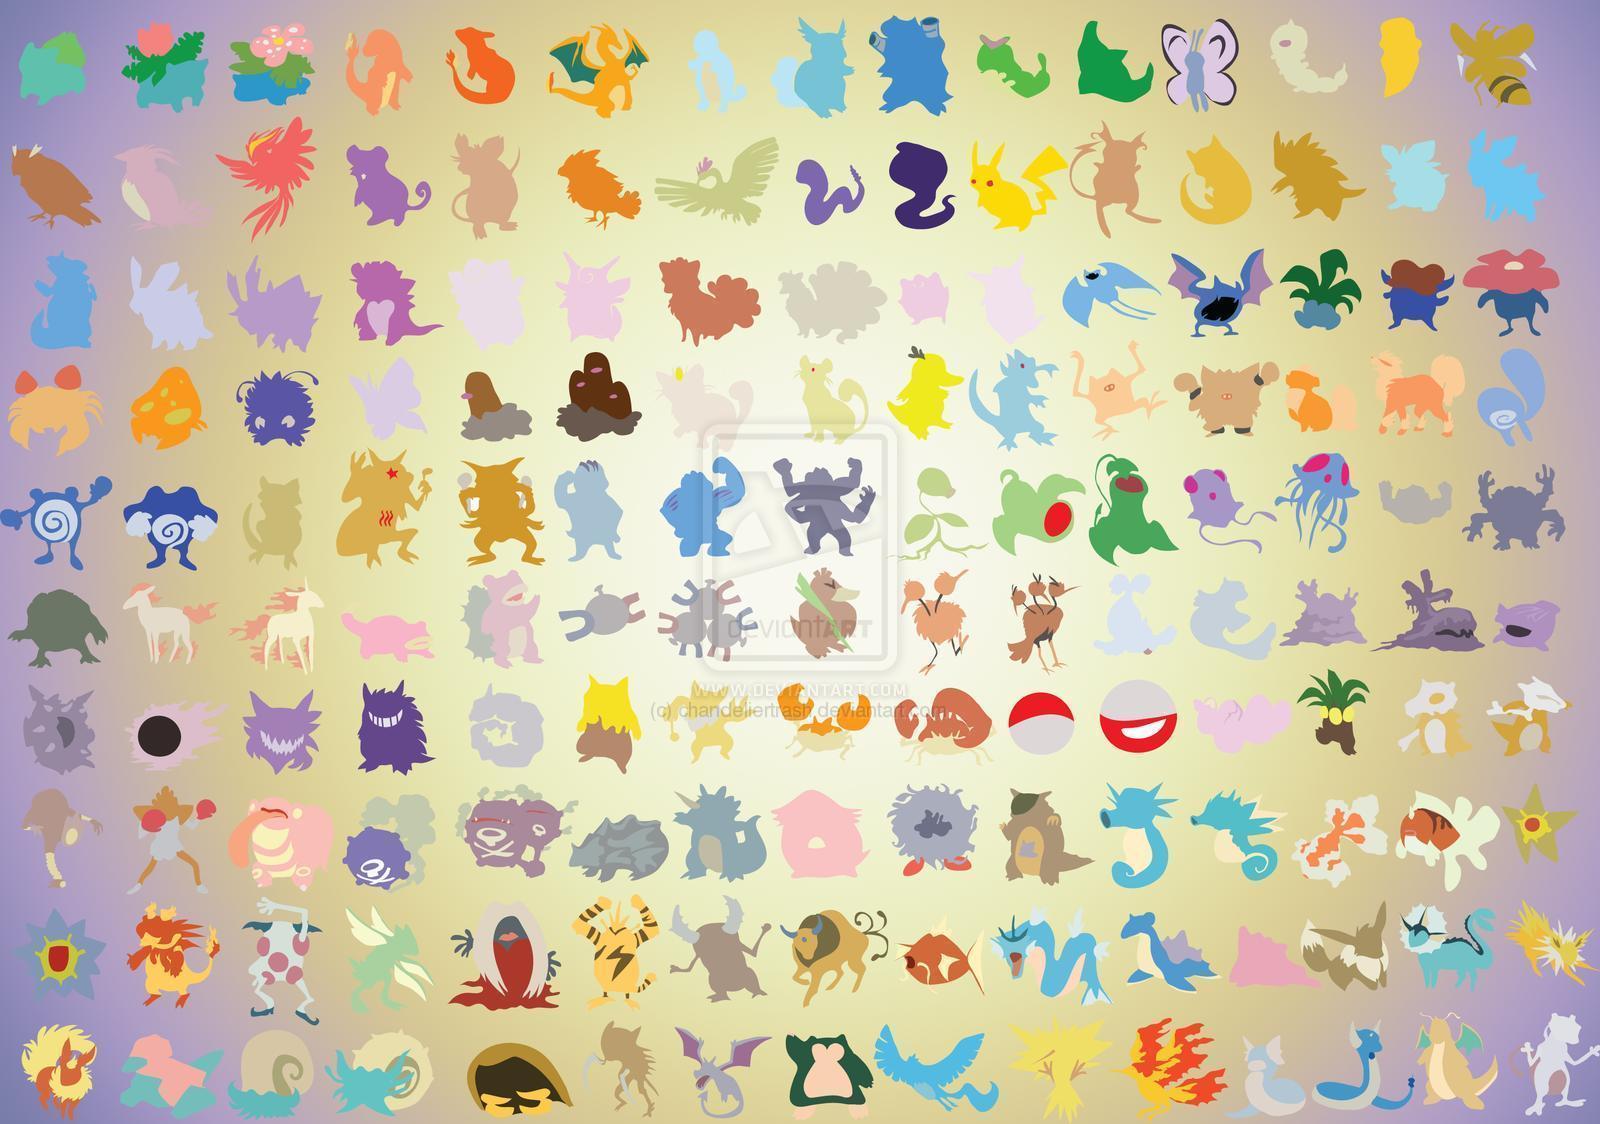 Original Pokemon Wallpapers - Wallpaper Cave